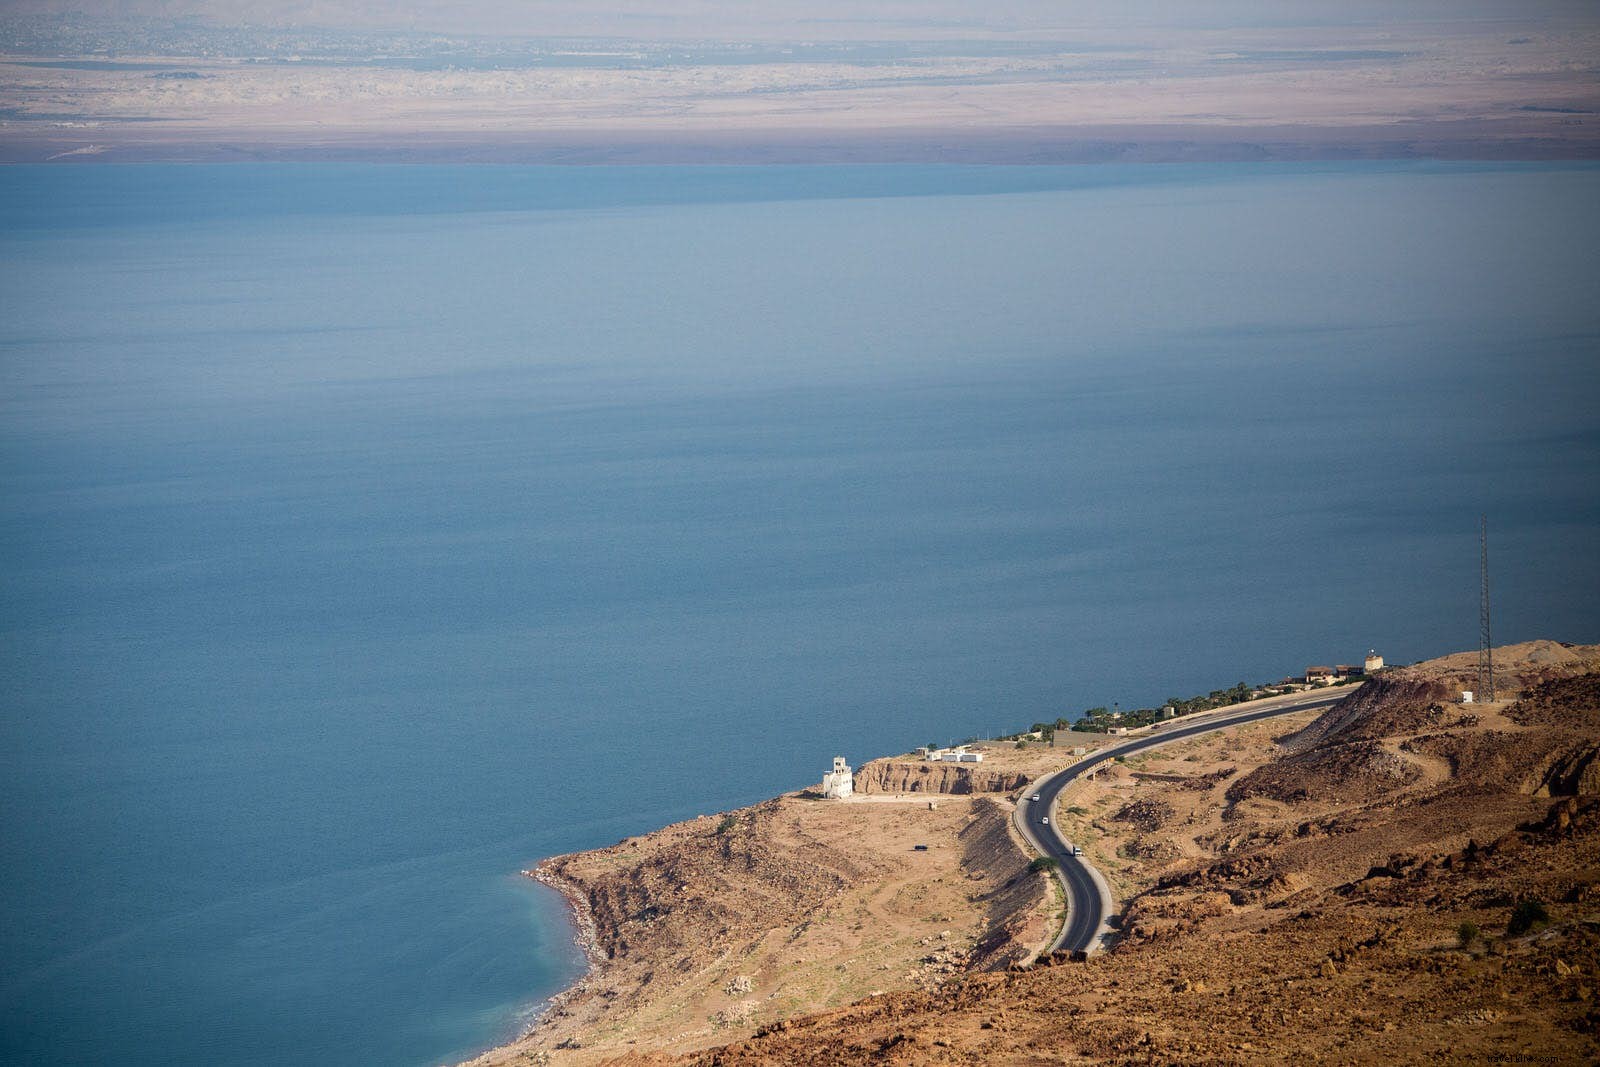 Mendaki wadi dan air terjun di pantai Laut Mati Yordania 